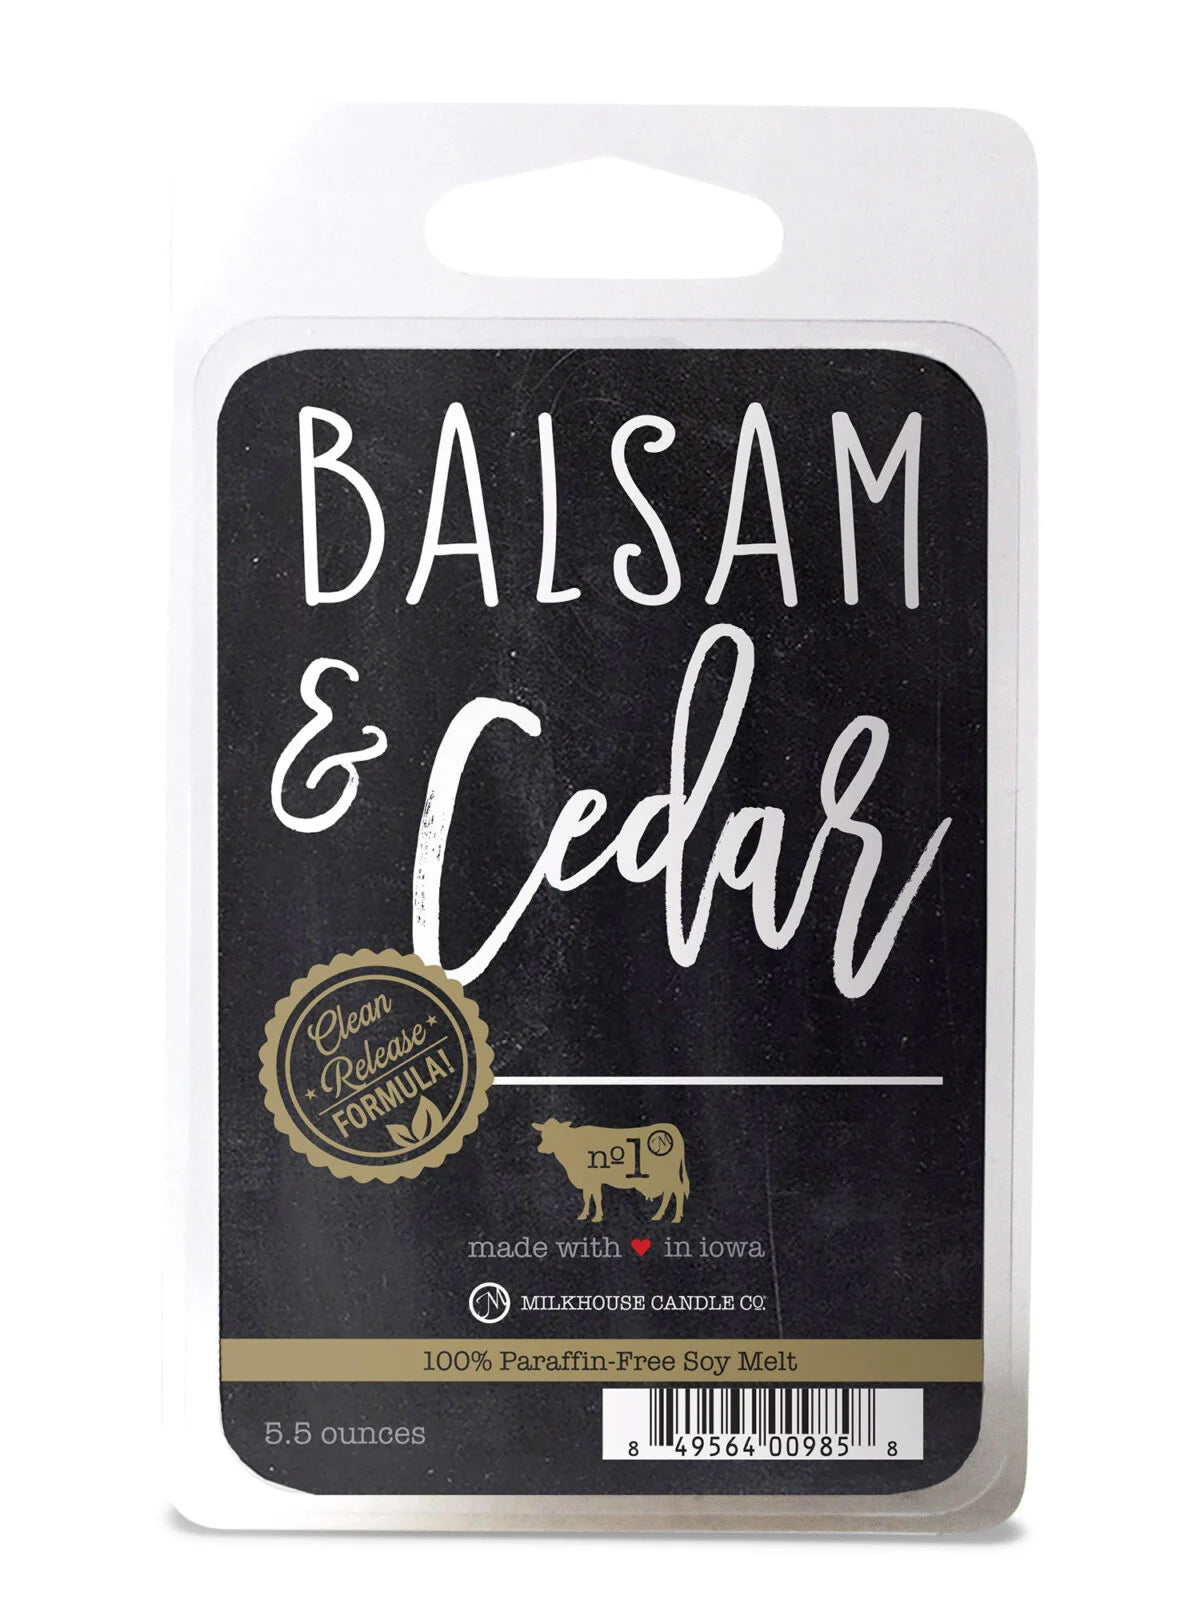 Balsam & Cedar Fragrance Melt